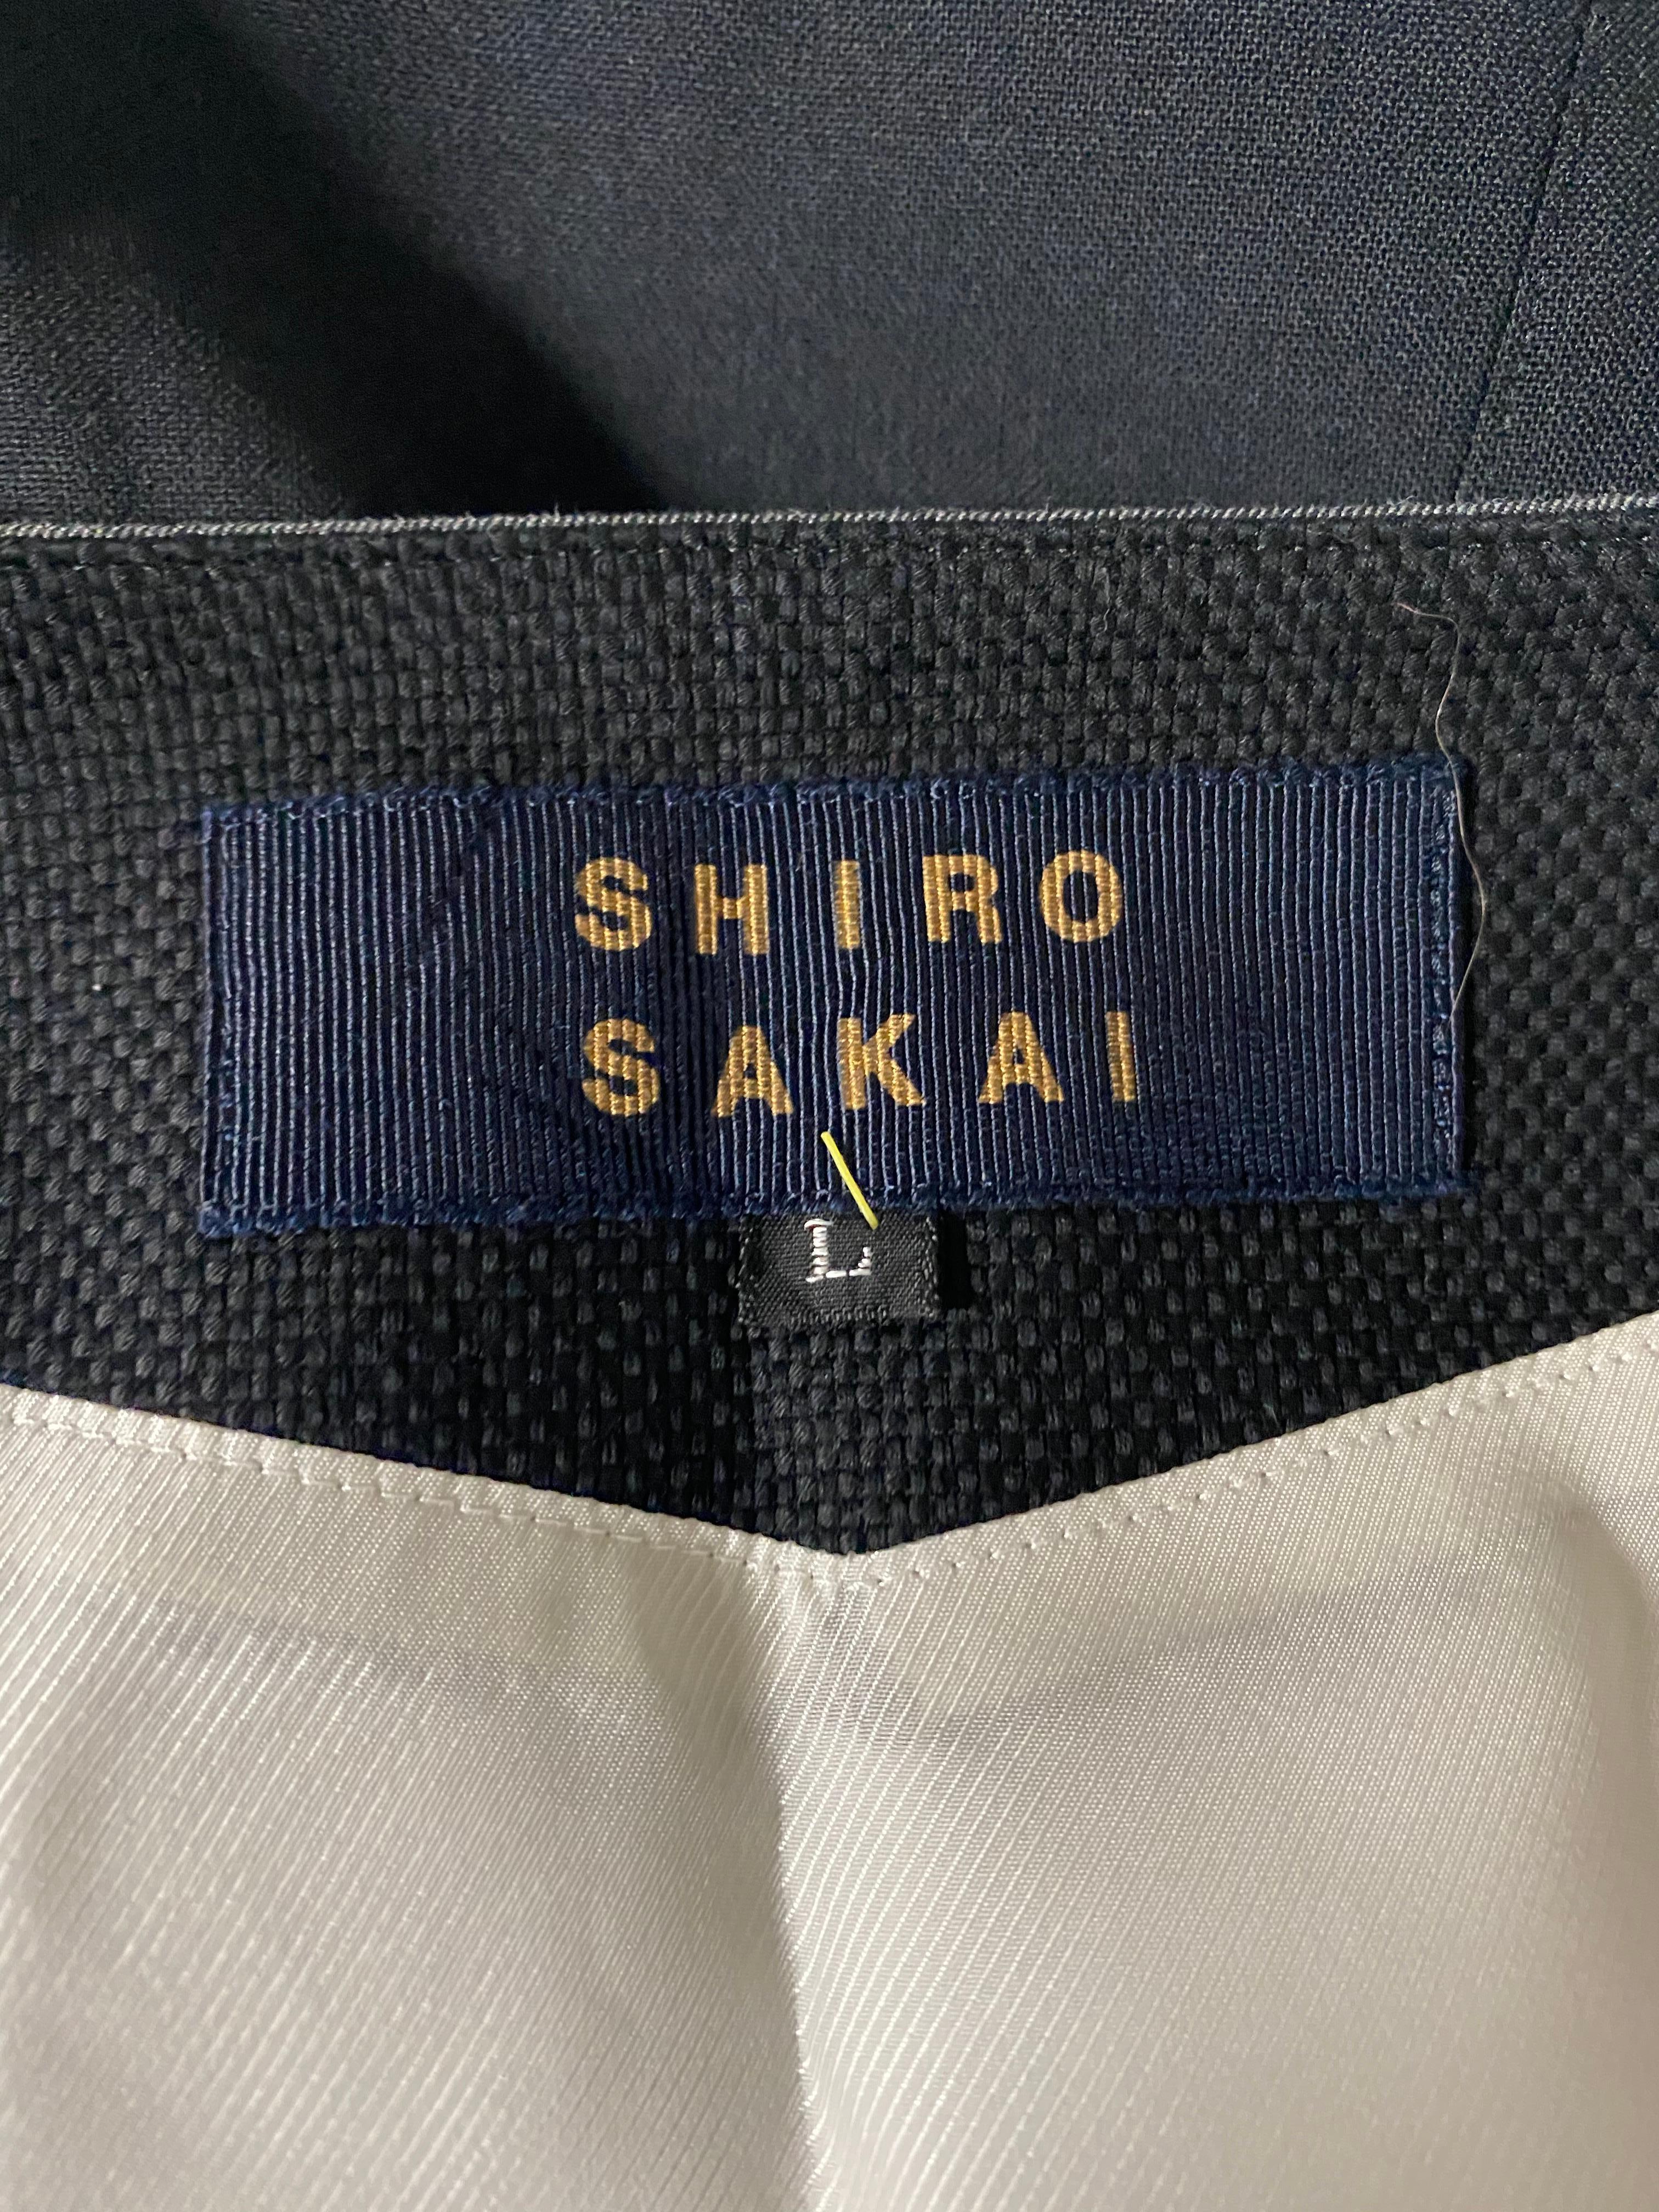 Shiro Sakai Black Sleeveless Button Down Mini Dress Size L For Sale 3